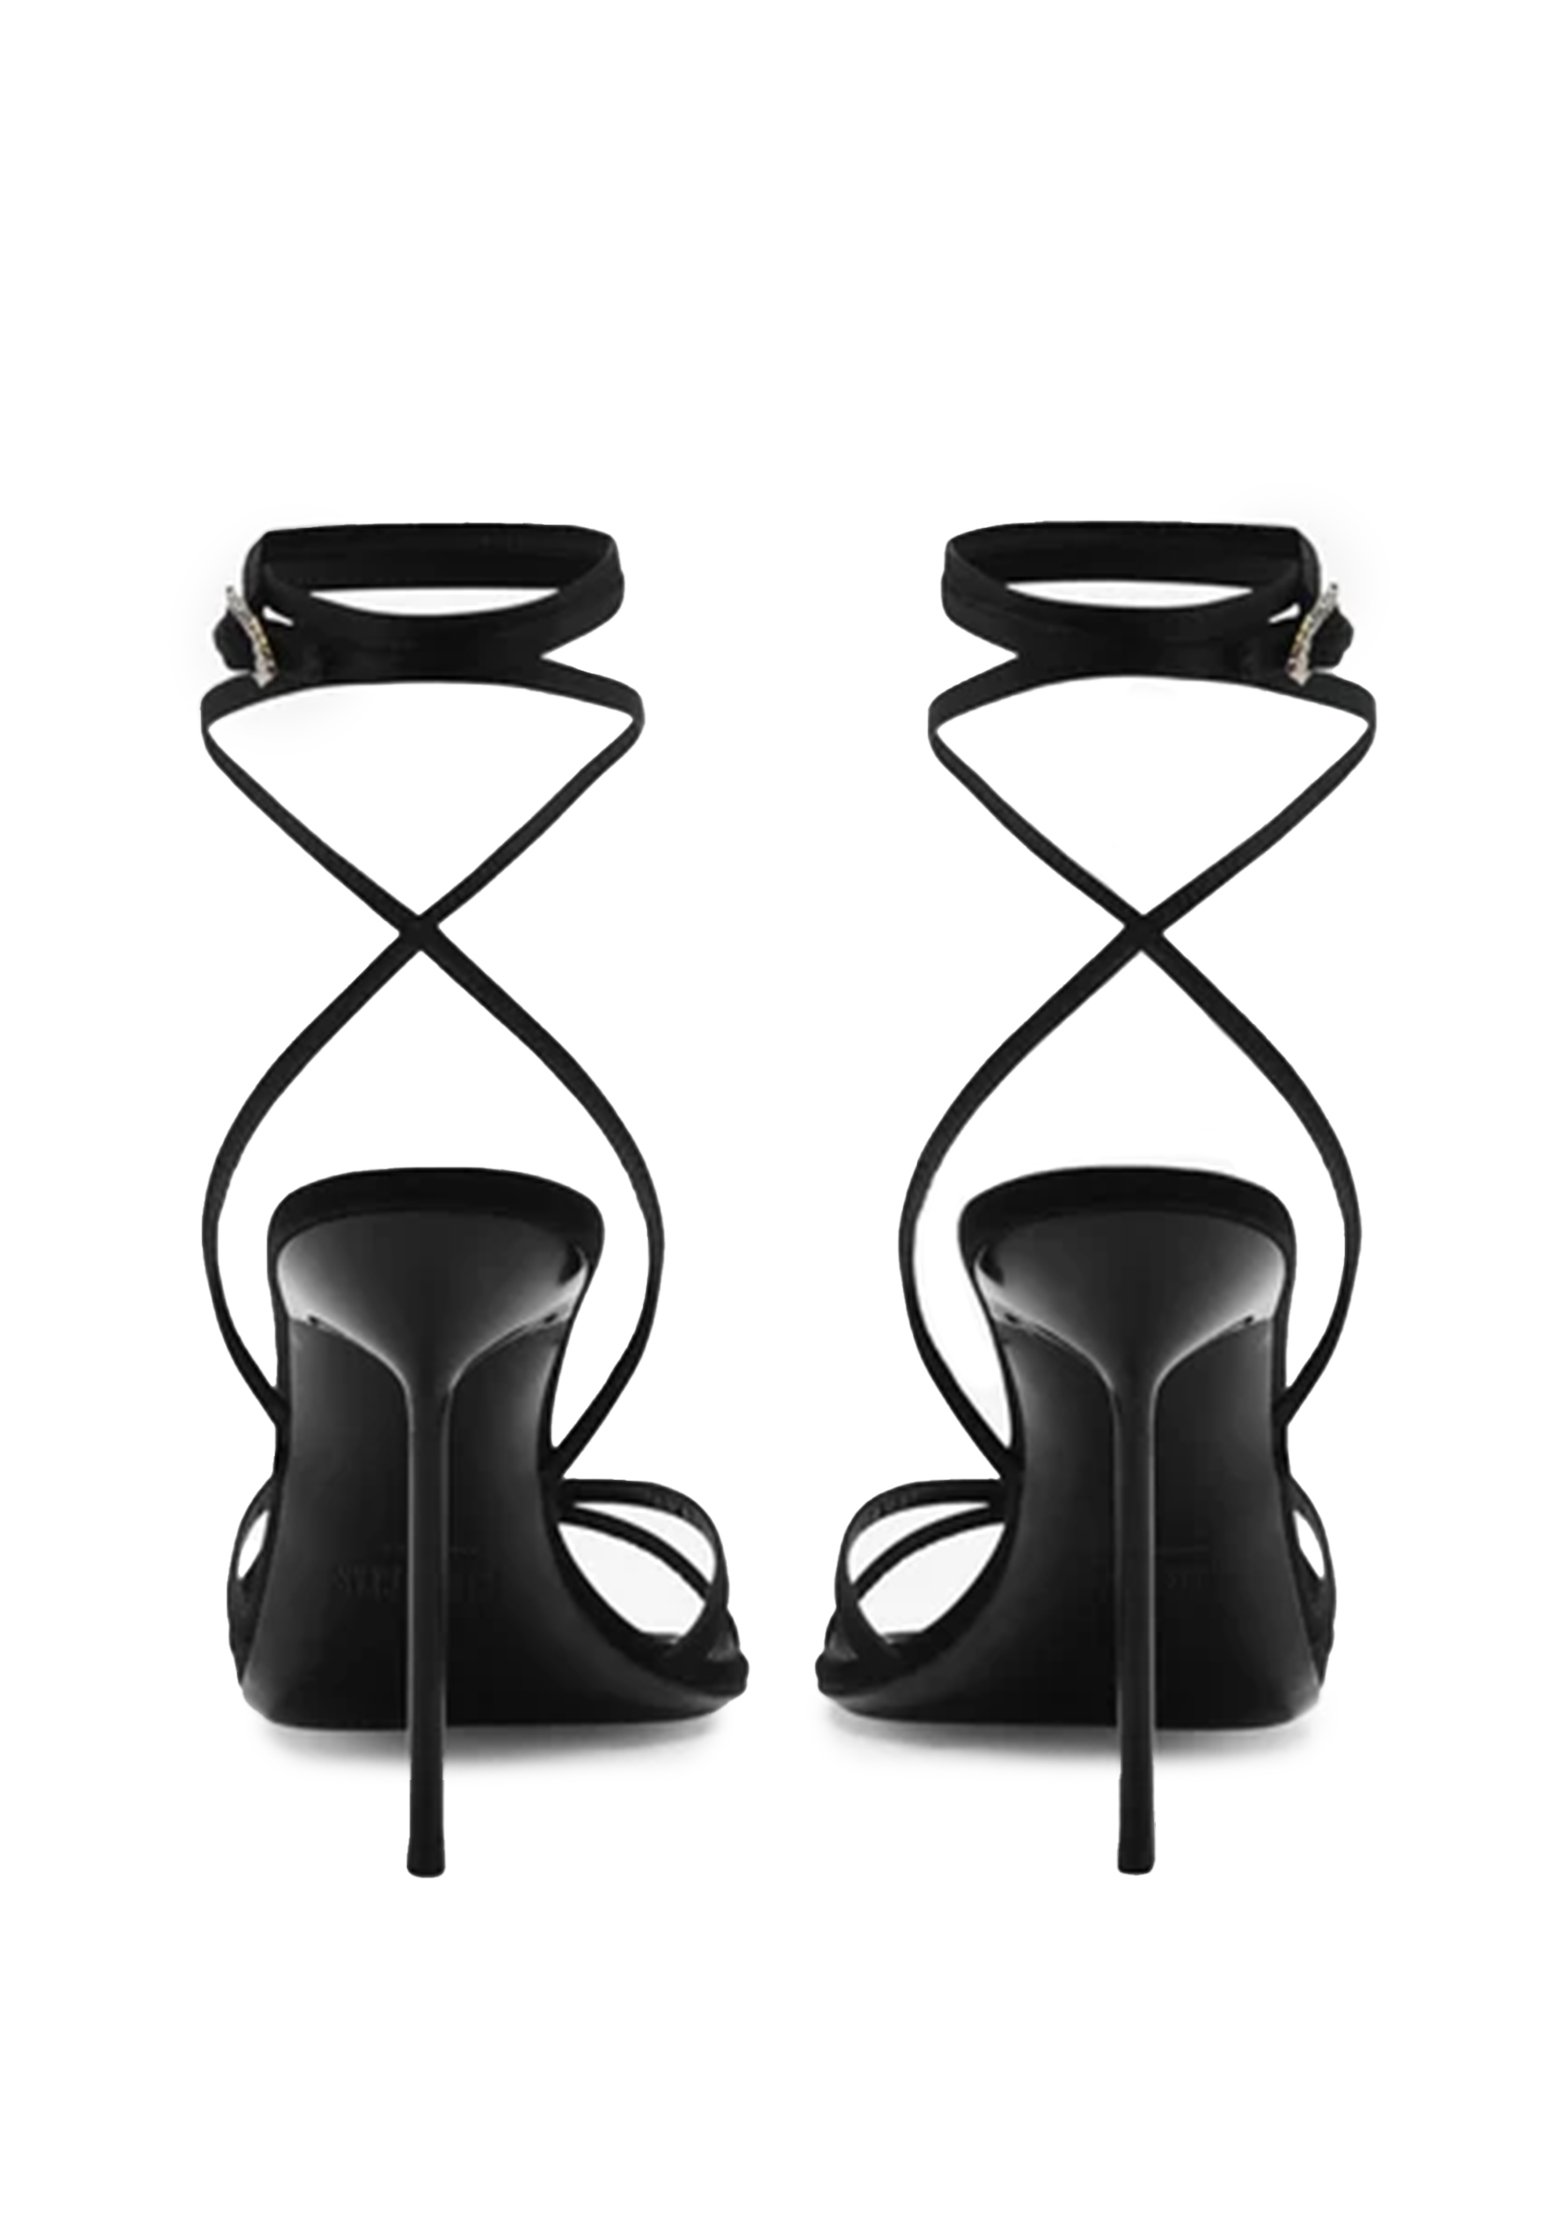 Sandal PARIS TEXAS Color: black (Code: 3916) in online store Allure